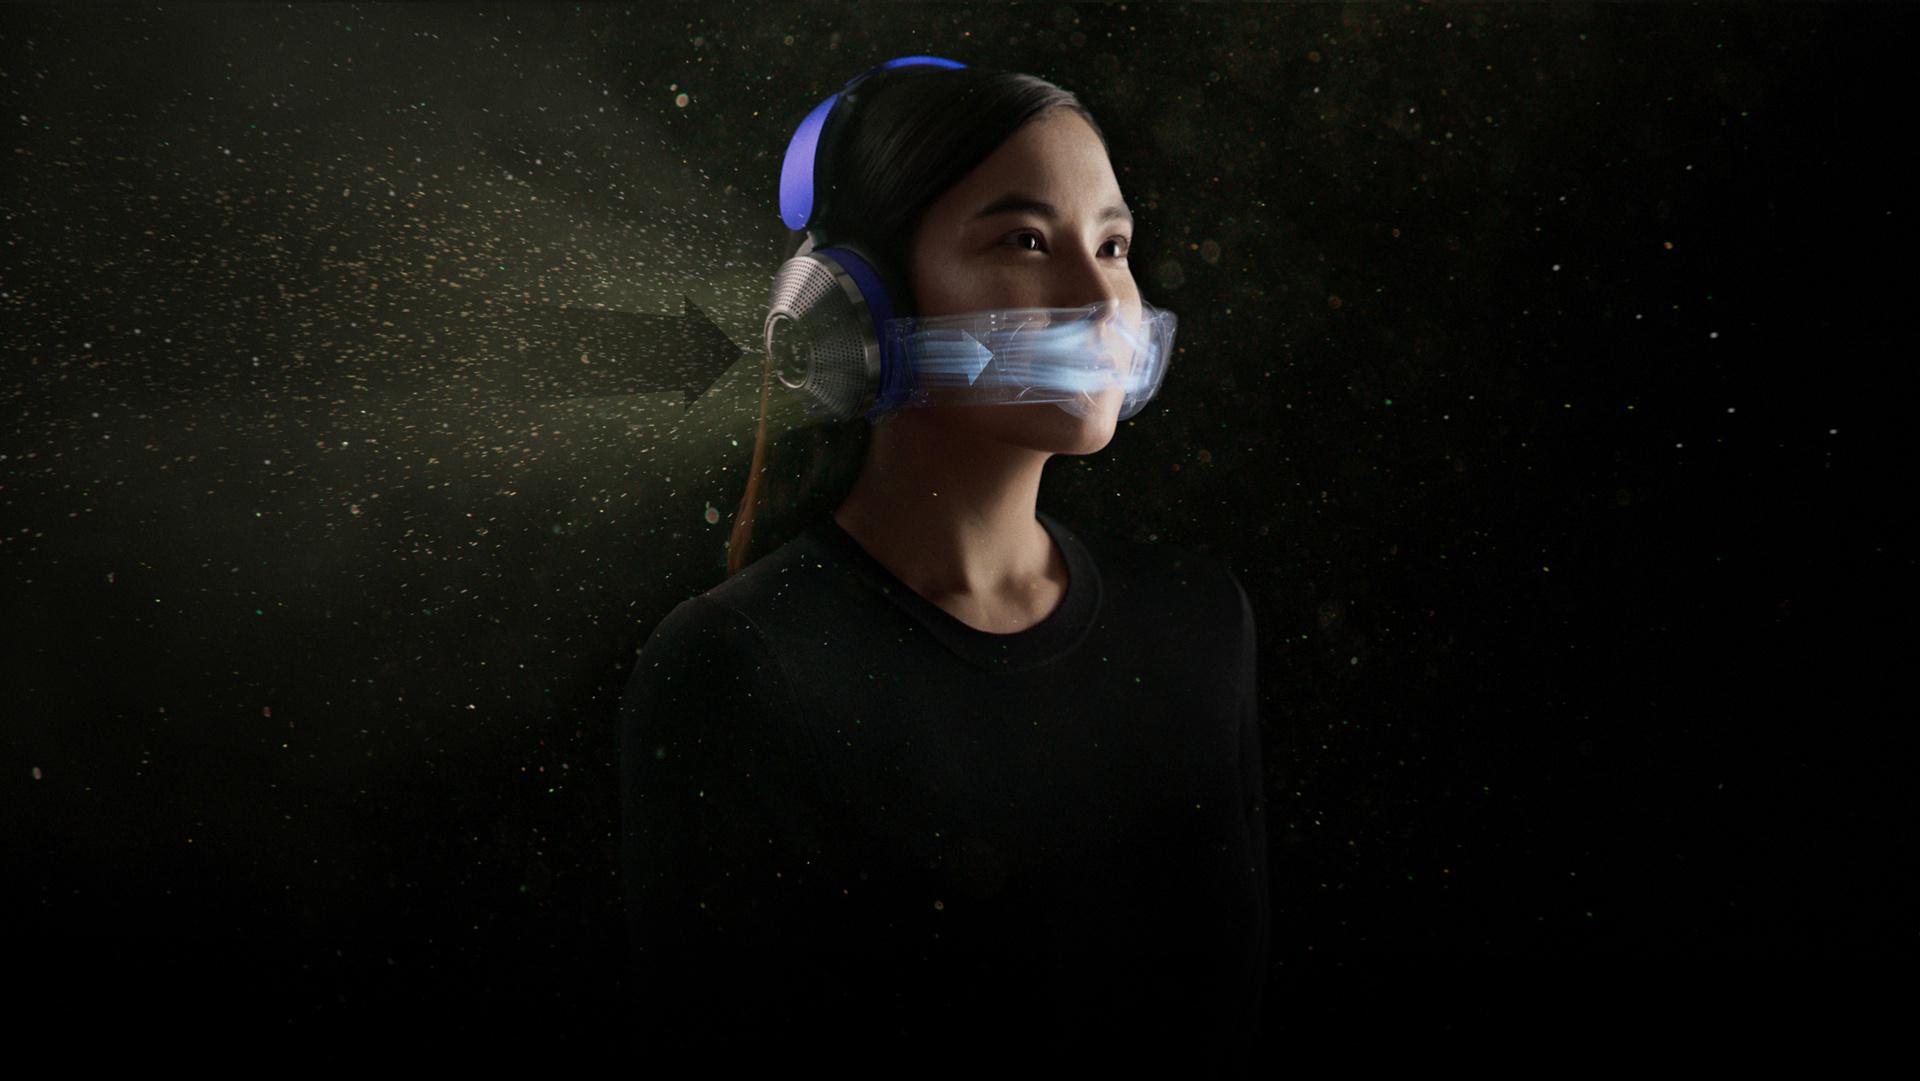 Woman wearing air-purifying headphones